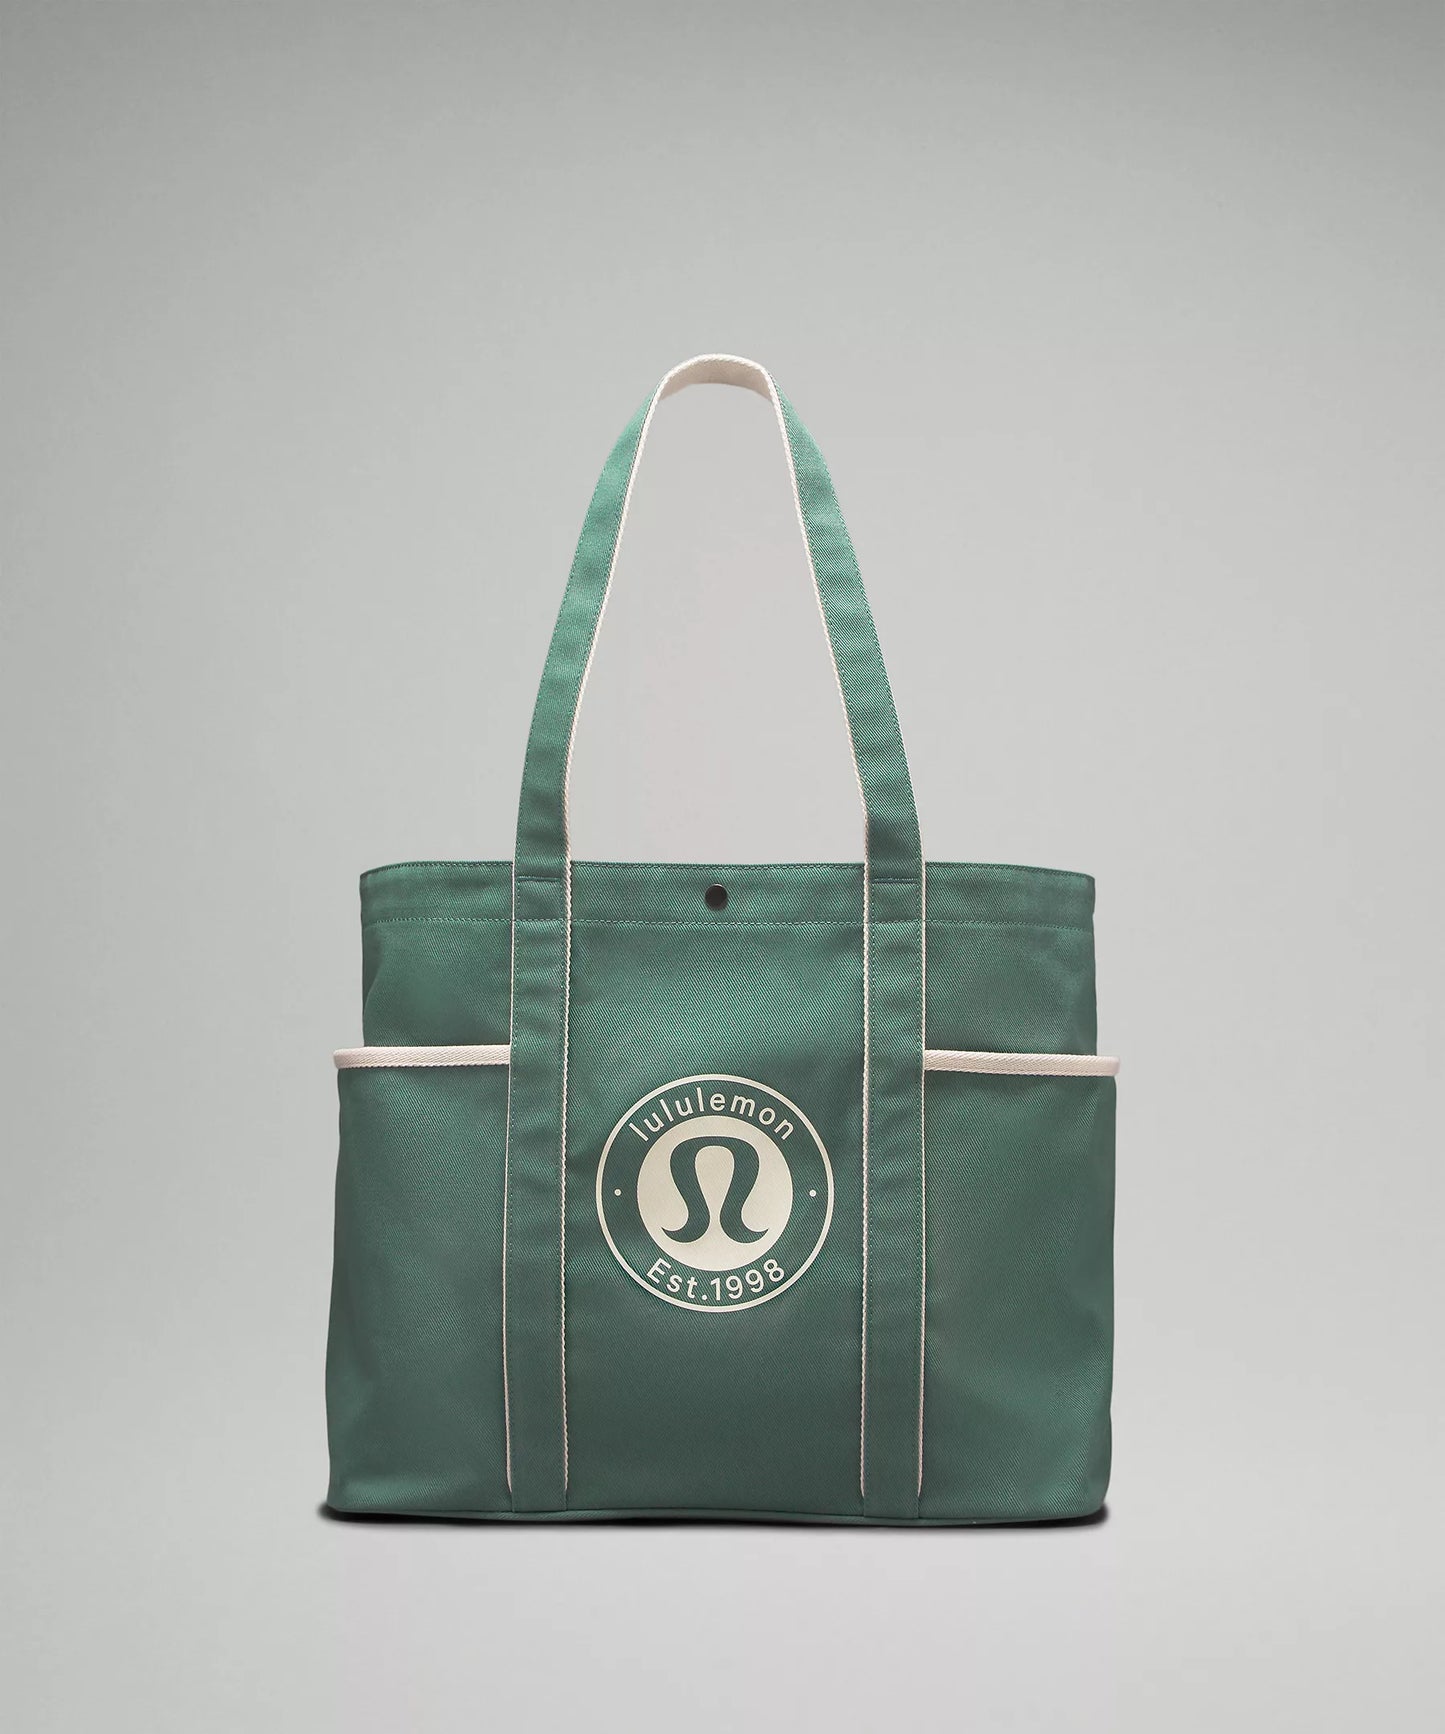 Lululemon tote bag - Women's handbags